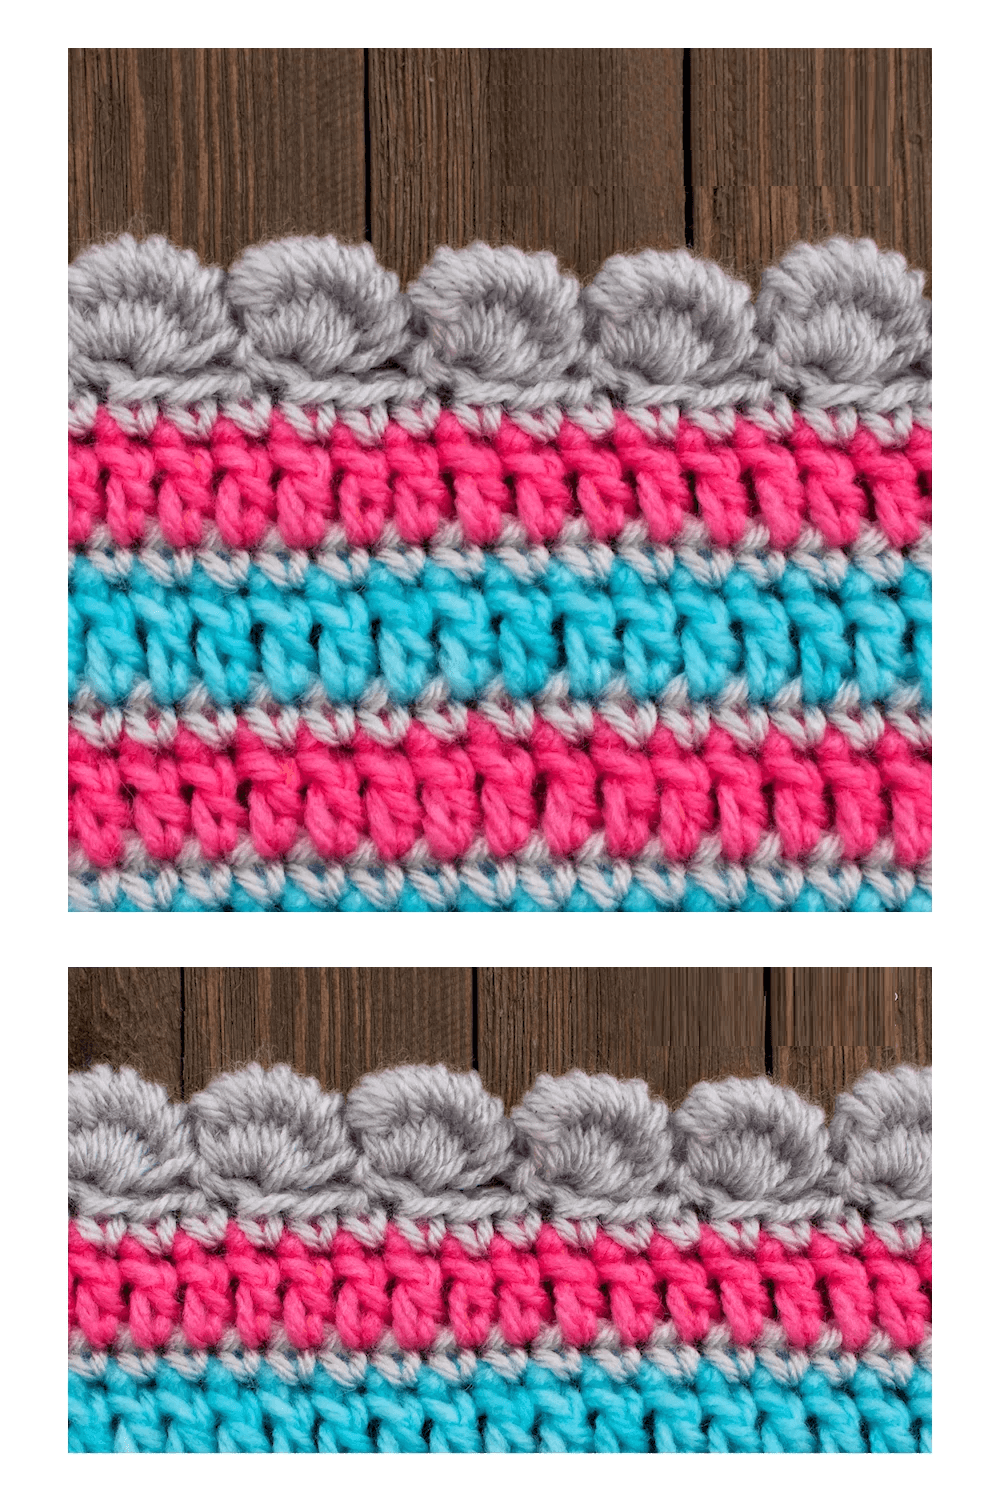 Download 20+ Creative Crochet Bullion Stitch Free Patterns (With ...